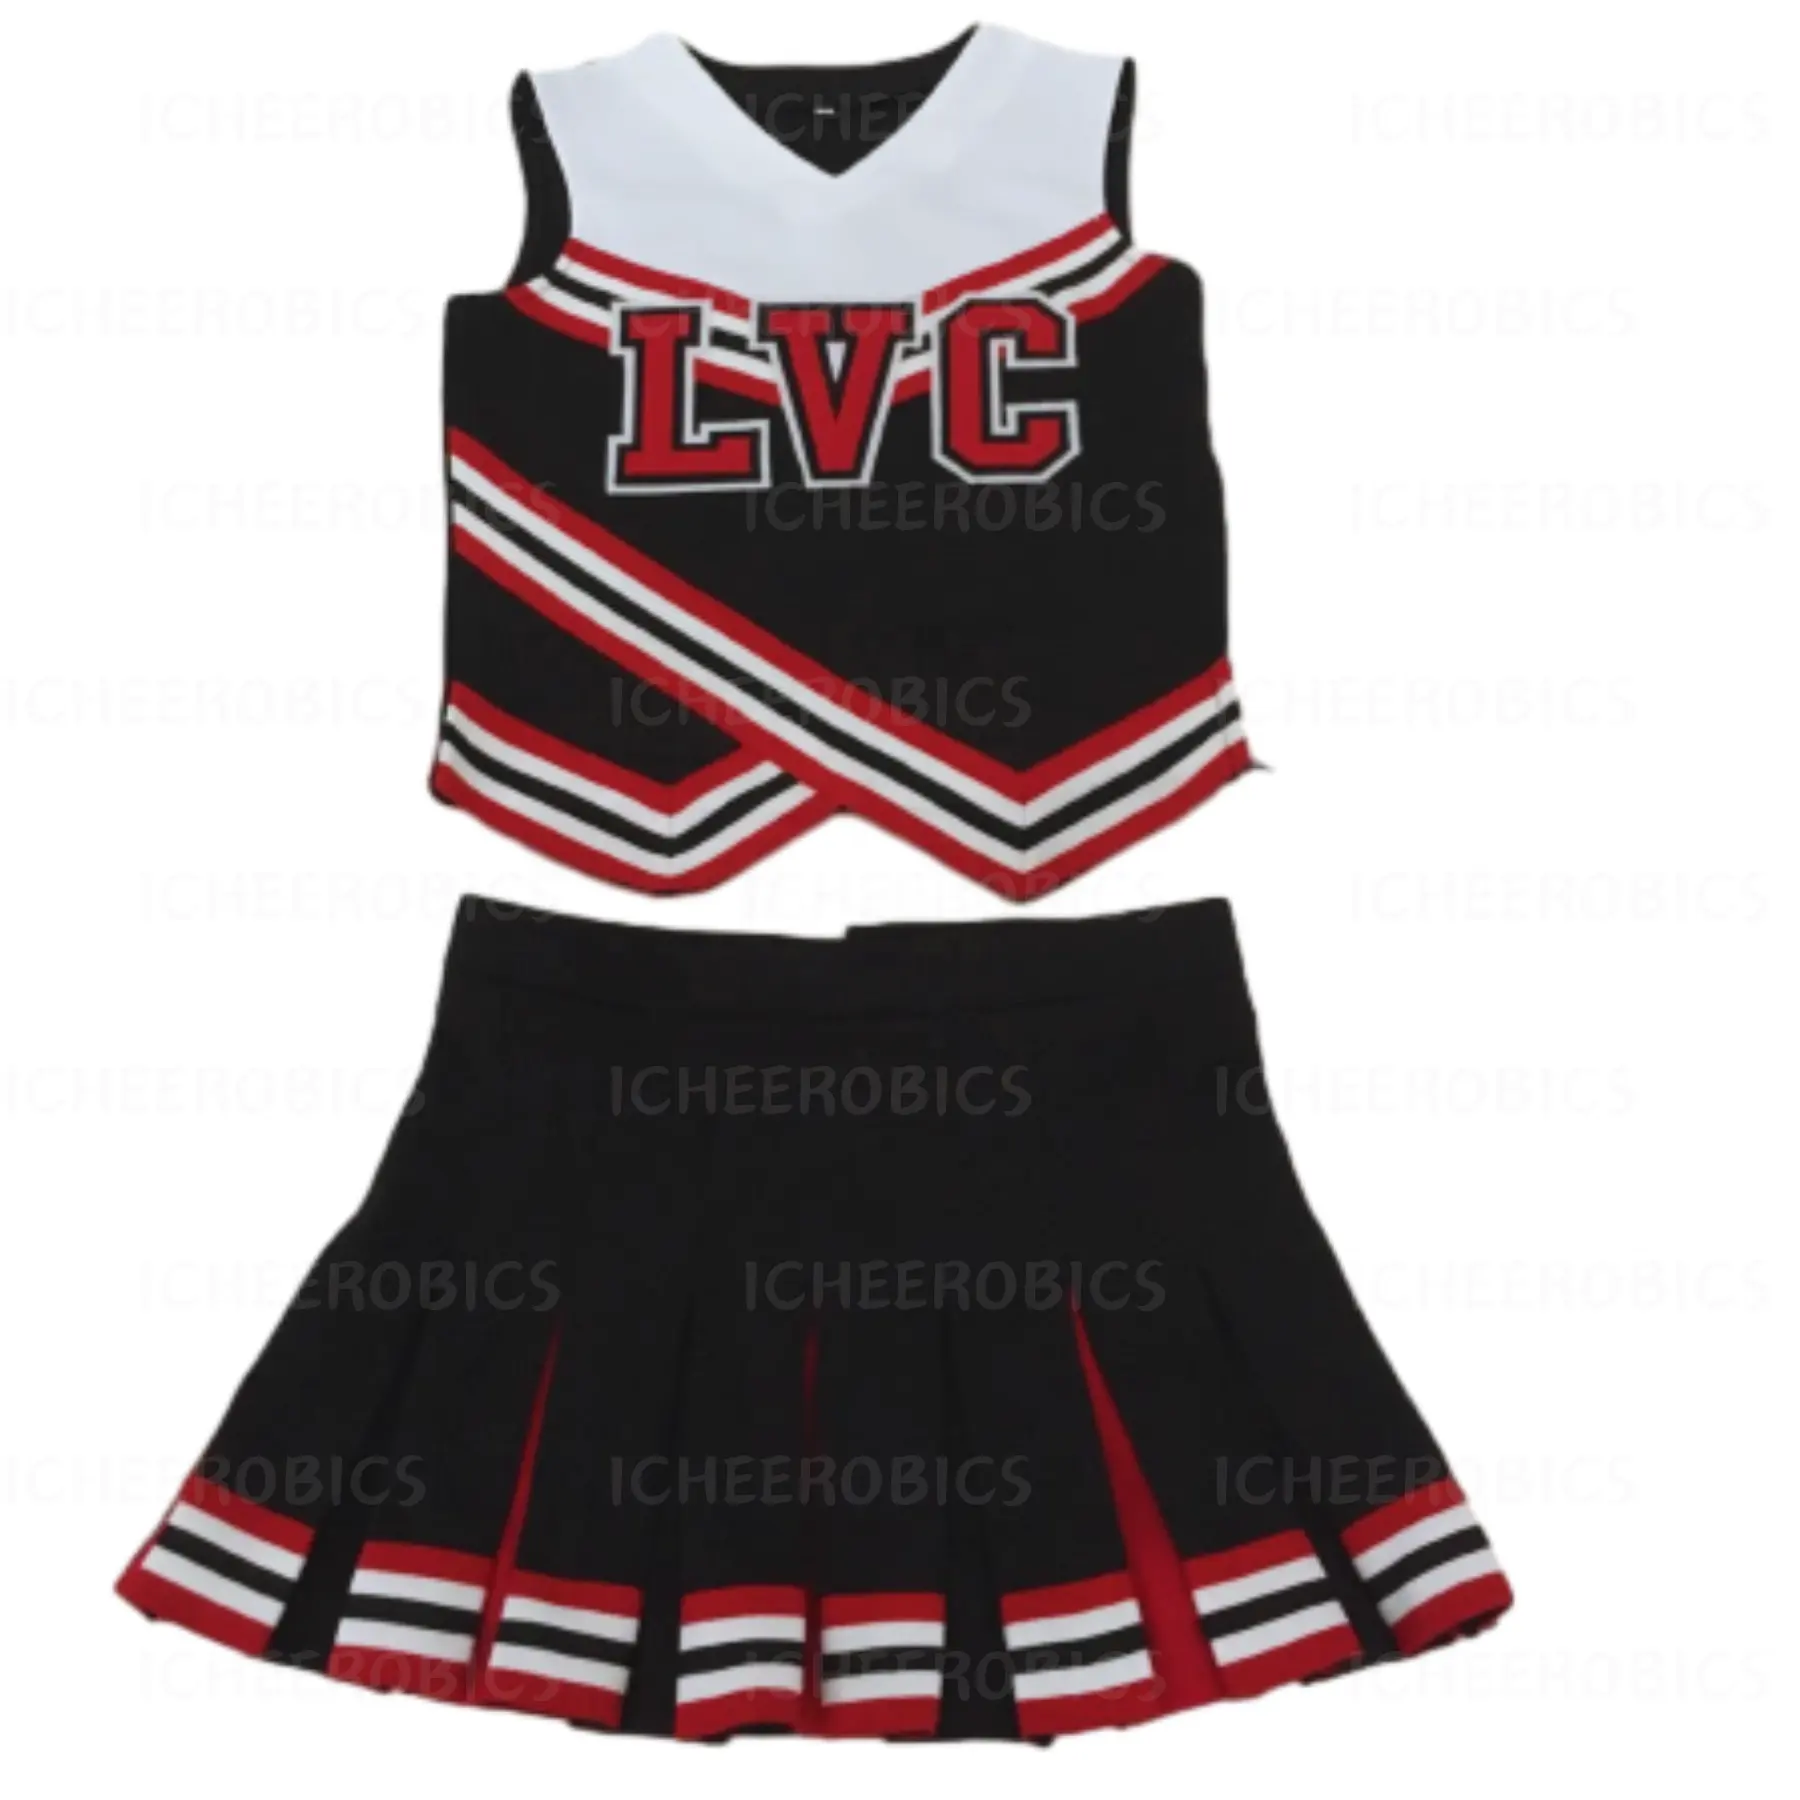 Icheerobics Roman Fabric Sideline Cheer Uniforms Cheerleading Uniforms For Boys School Uniforms